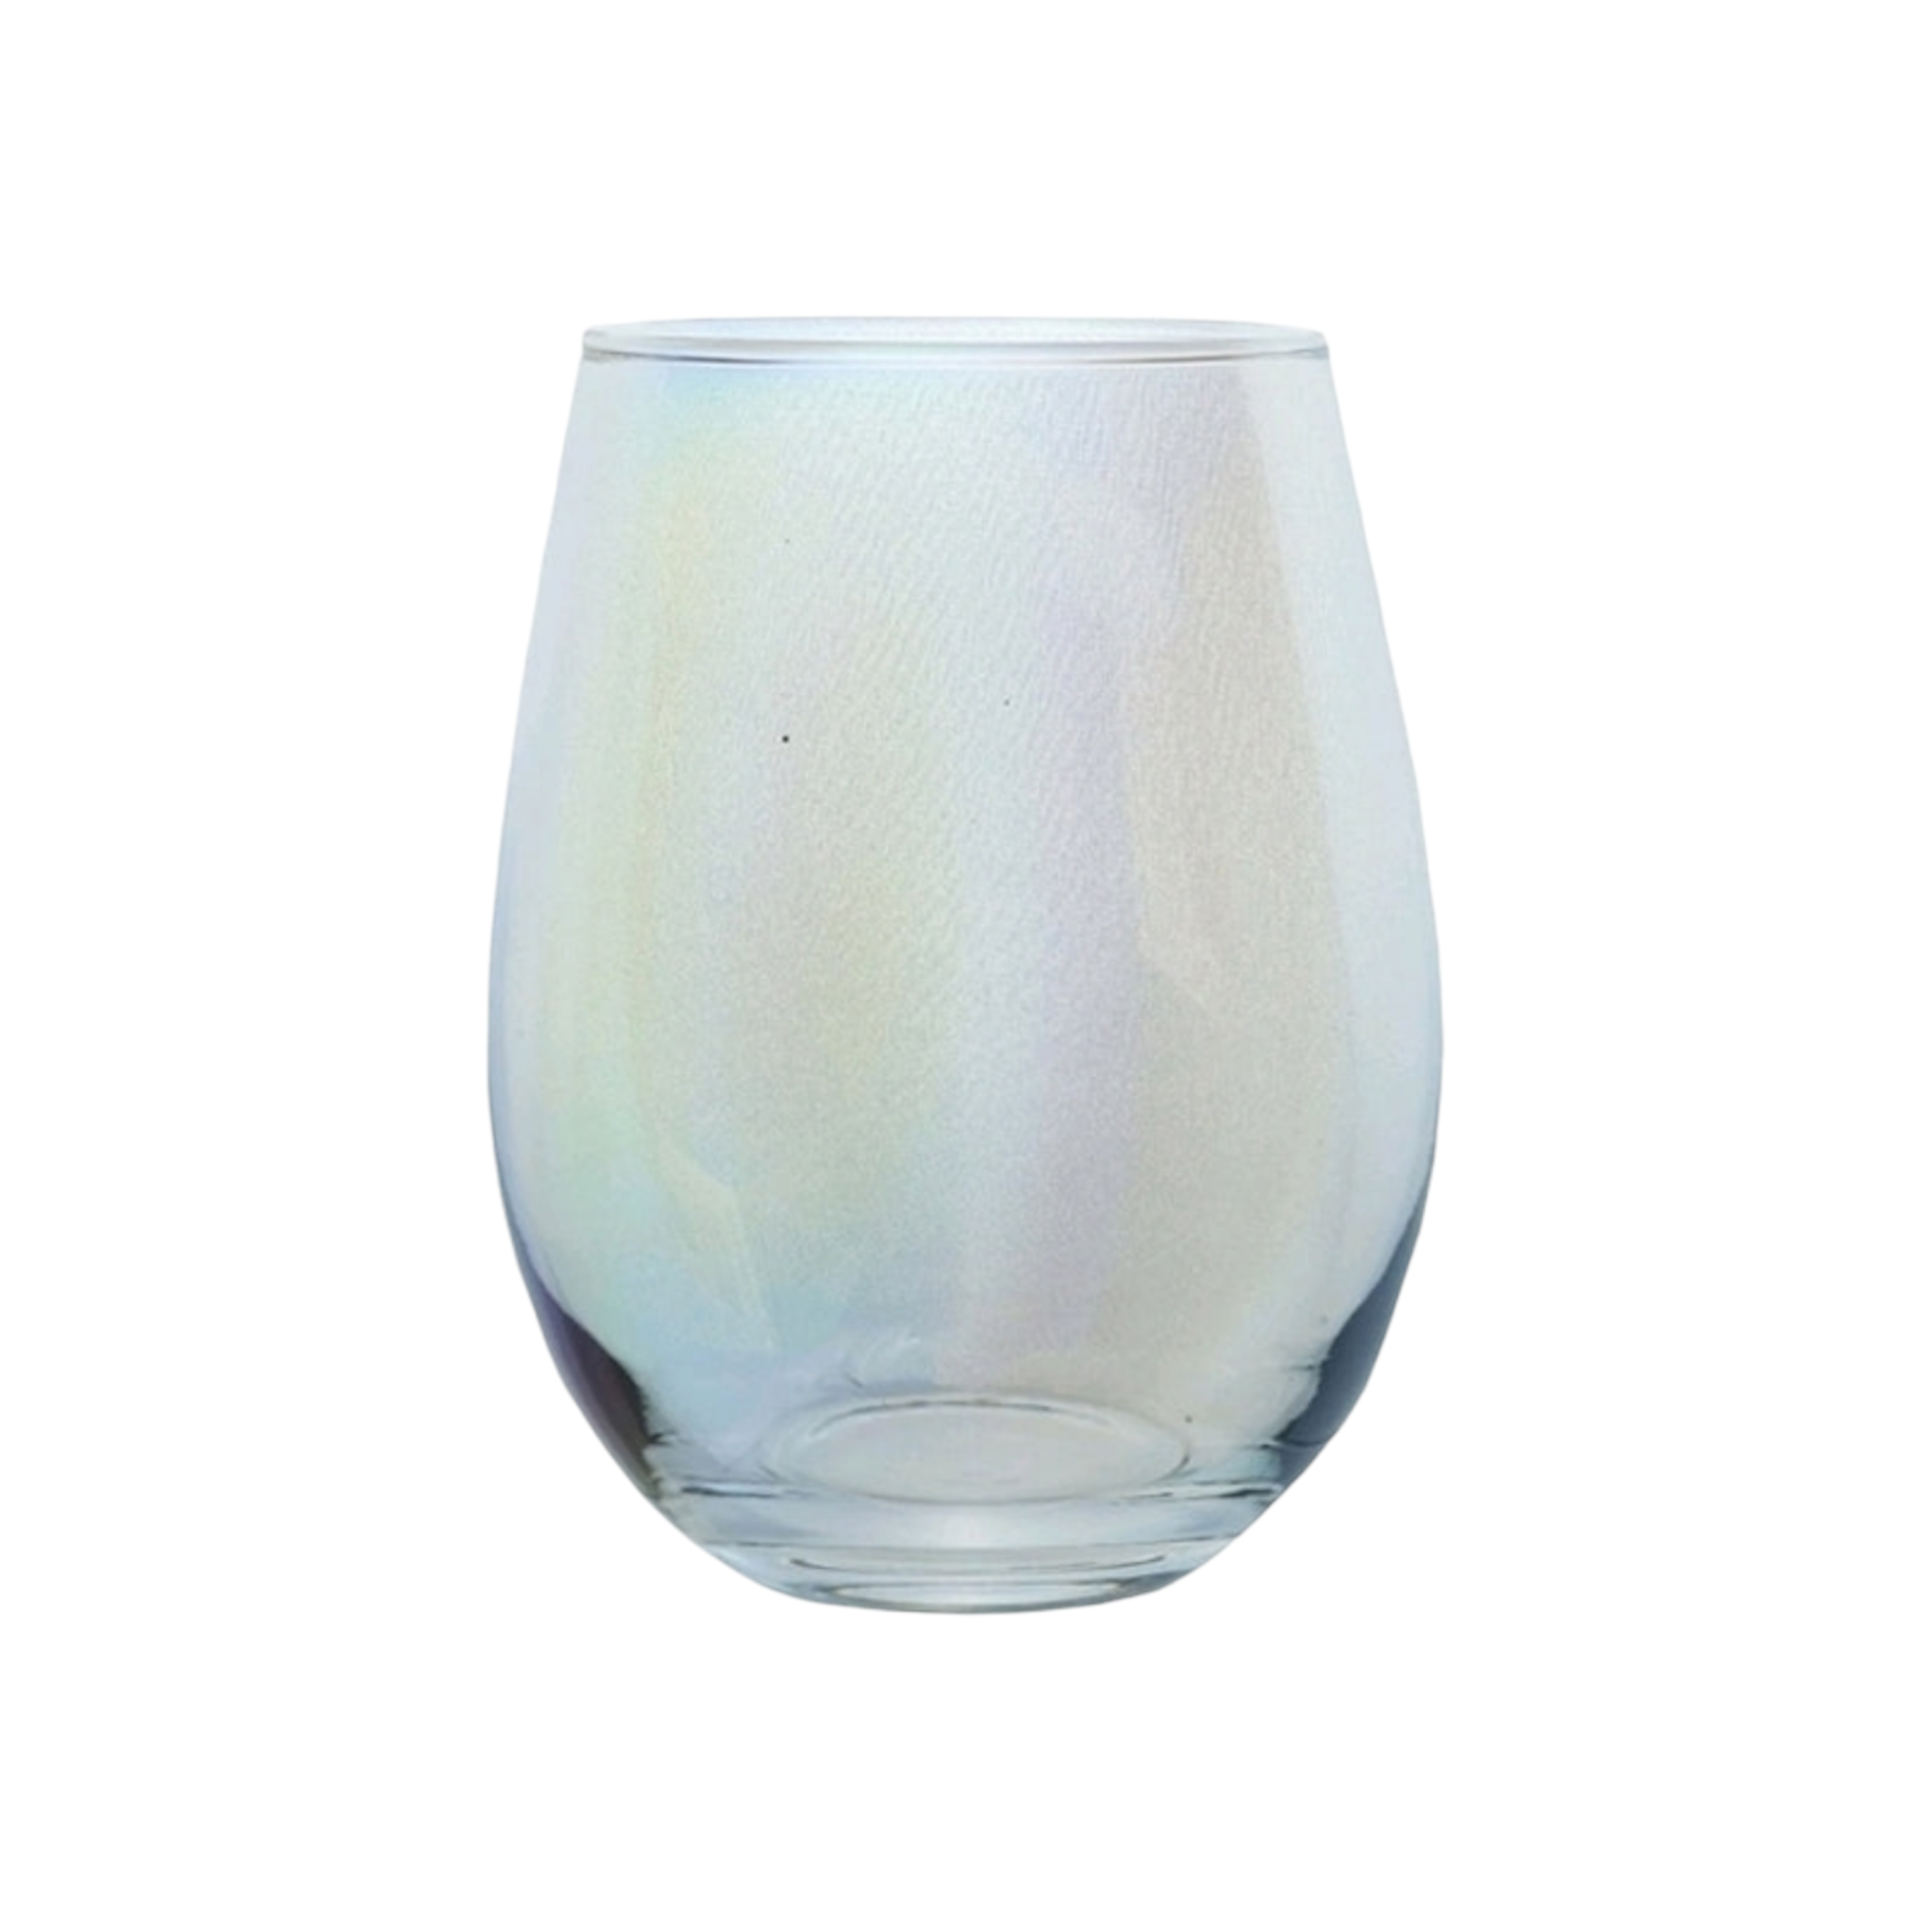 Aqua Pearl Hiball Glass Tumbler 550ml 4pcs